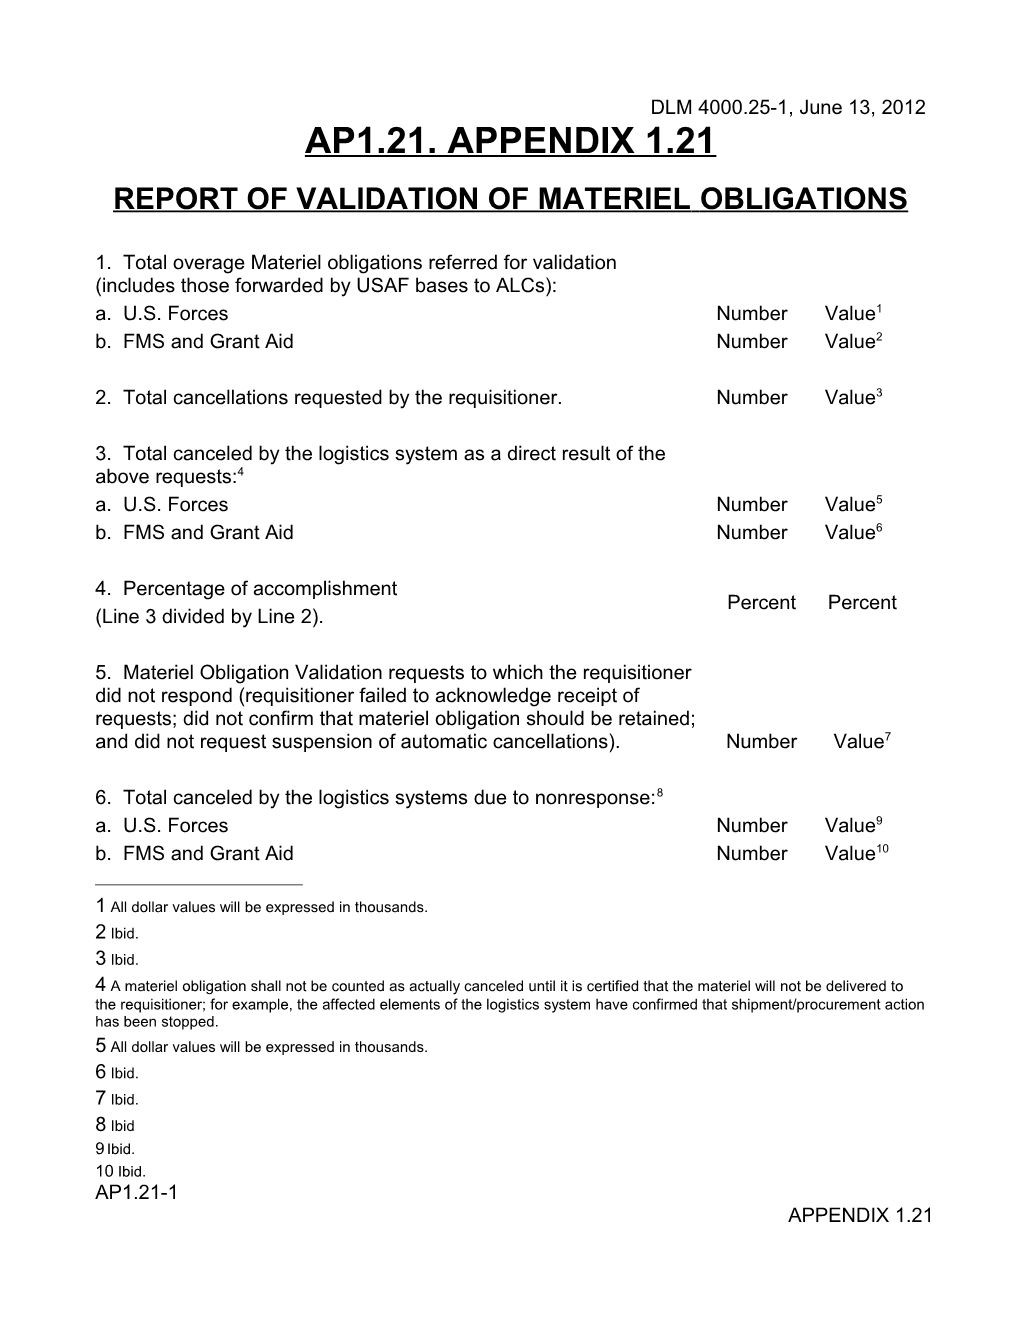 Appendix 1.21 - Report of Validation of Materiel Obligations